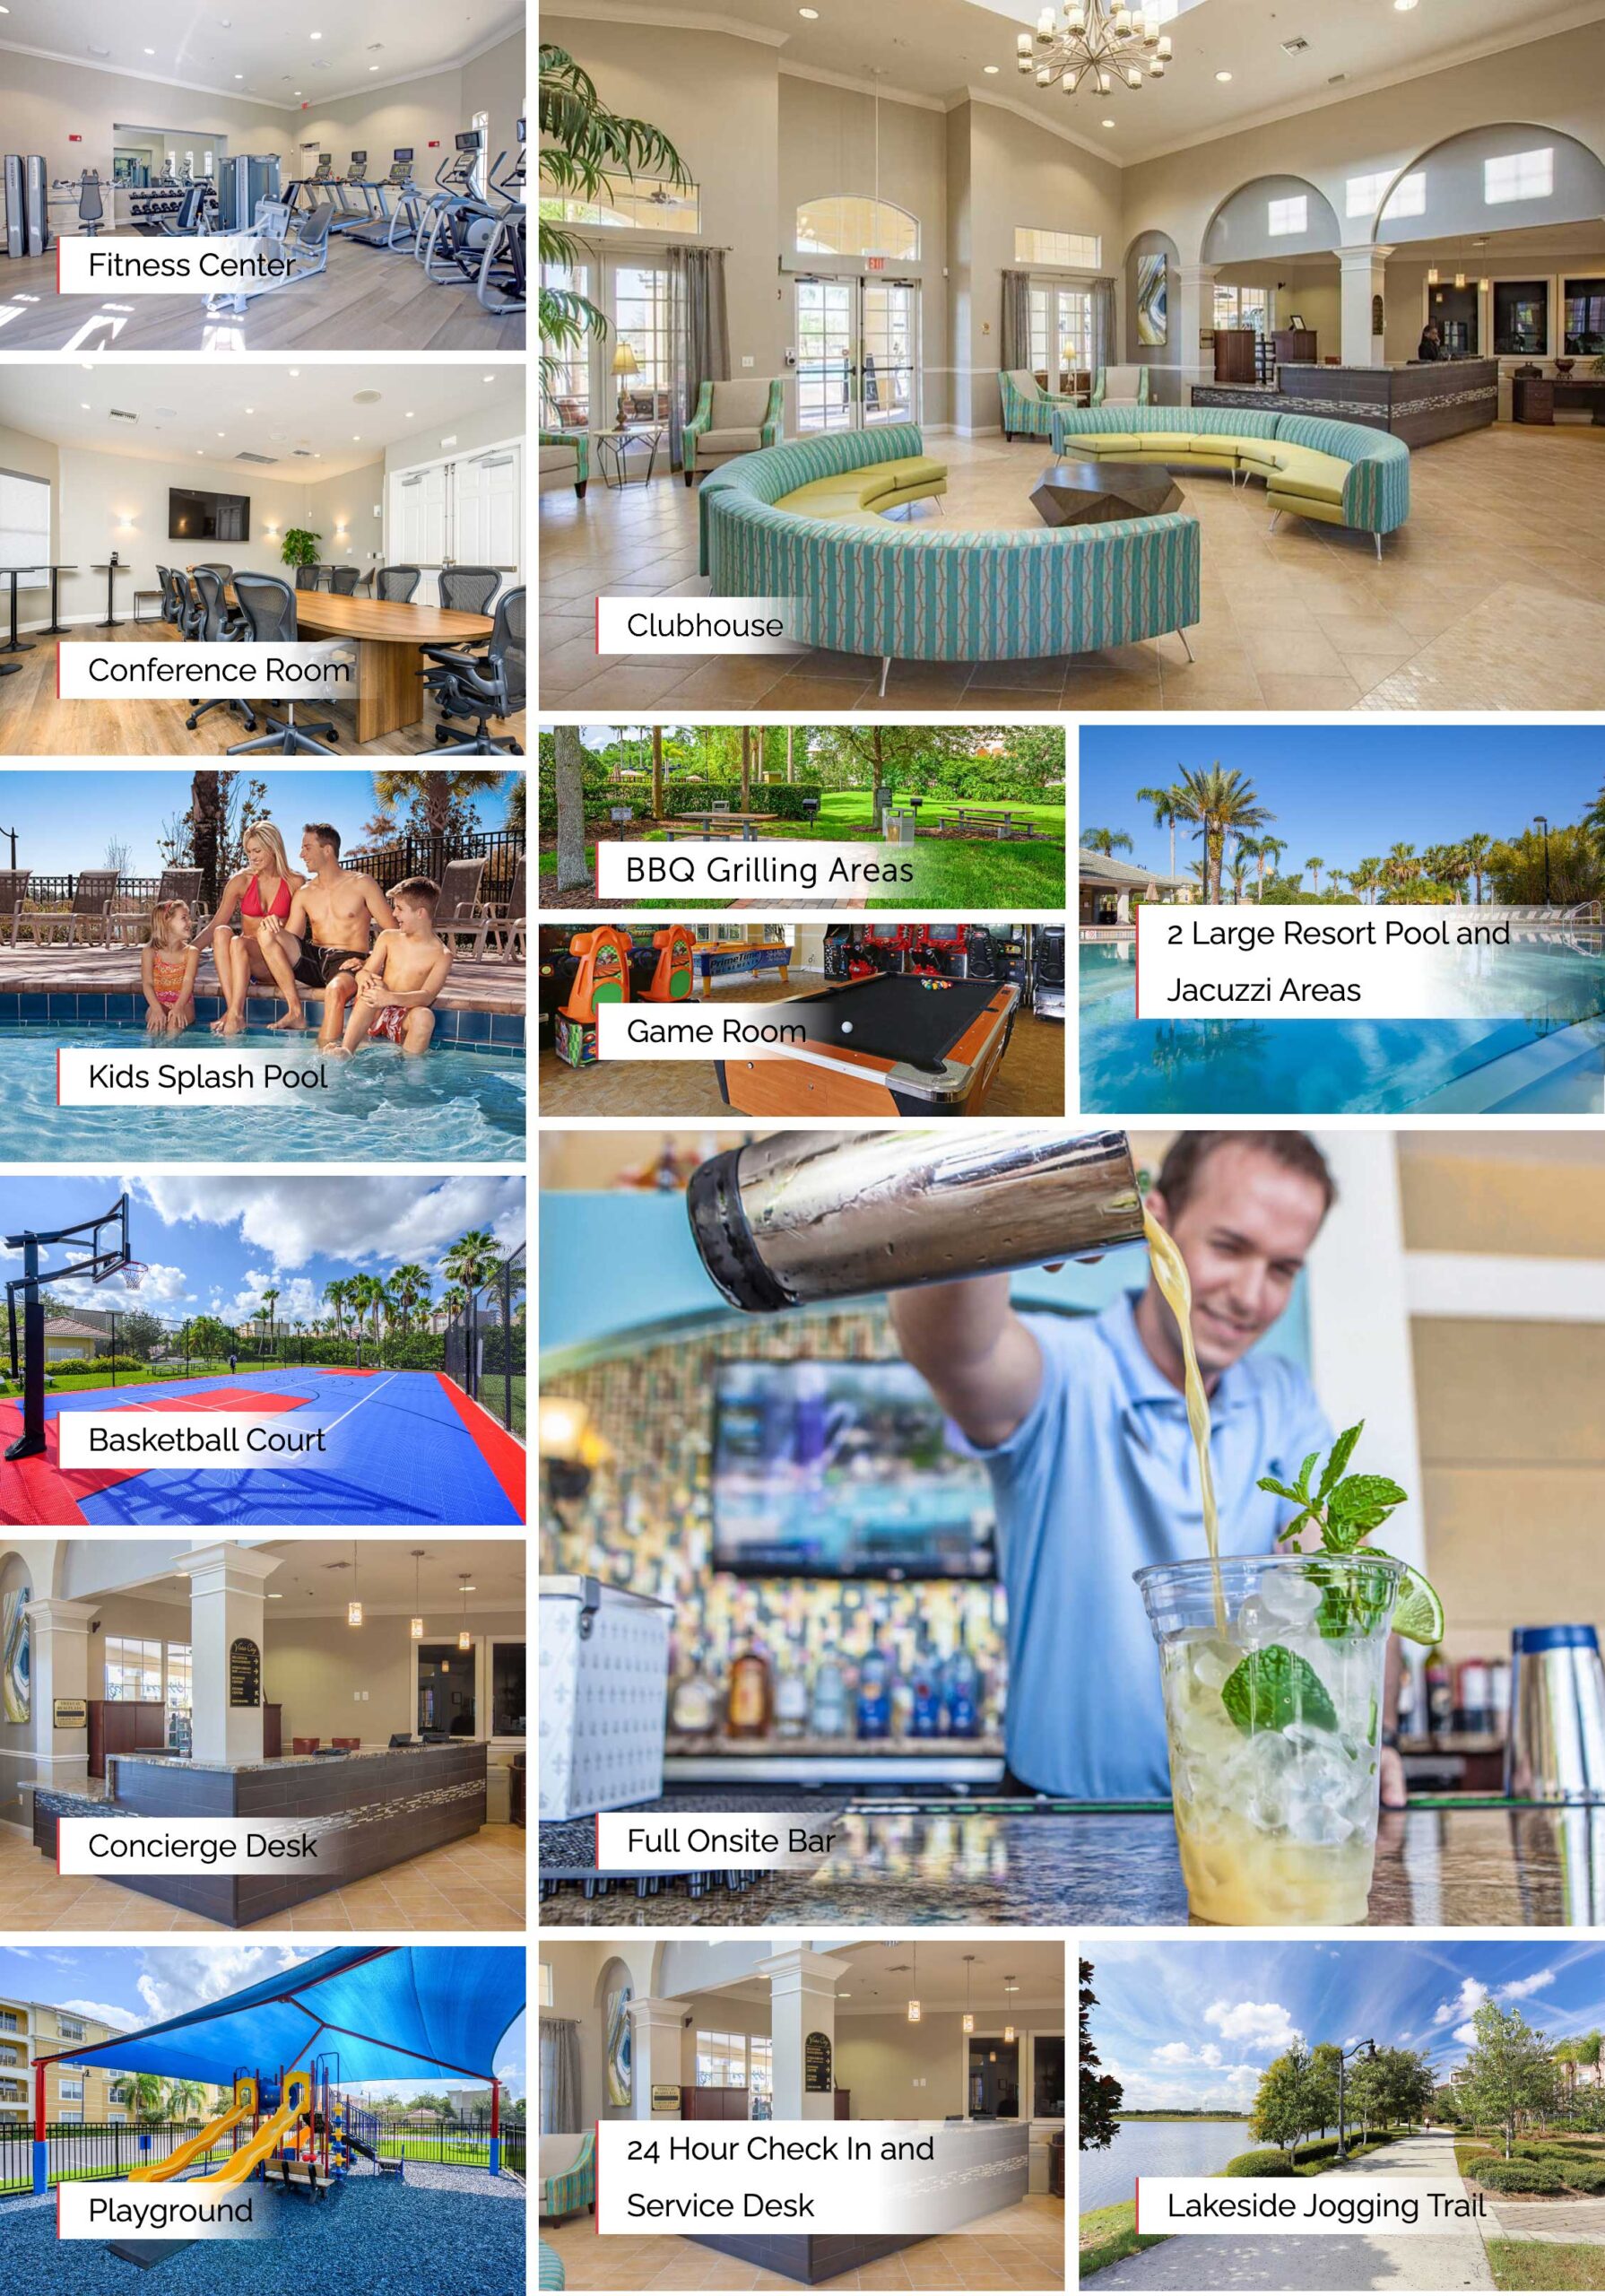 Vista-Cay-Resort-Amenities-graphic-optimized2